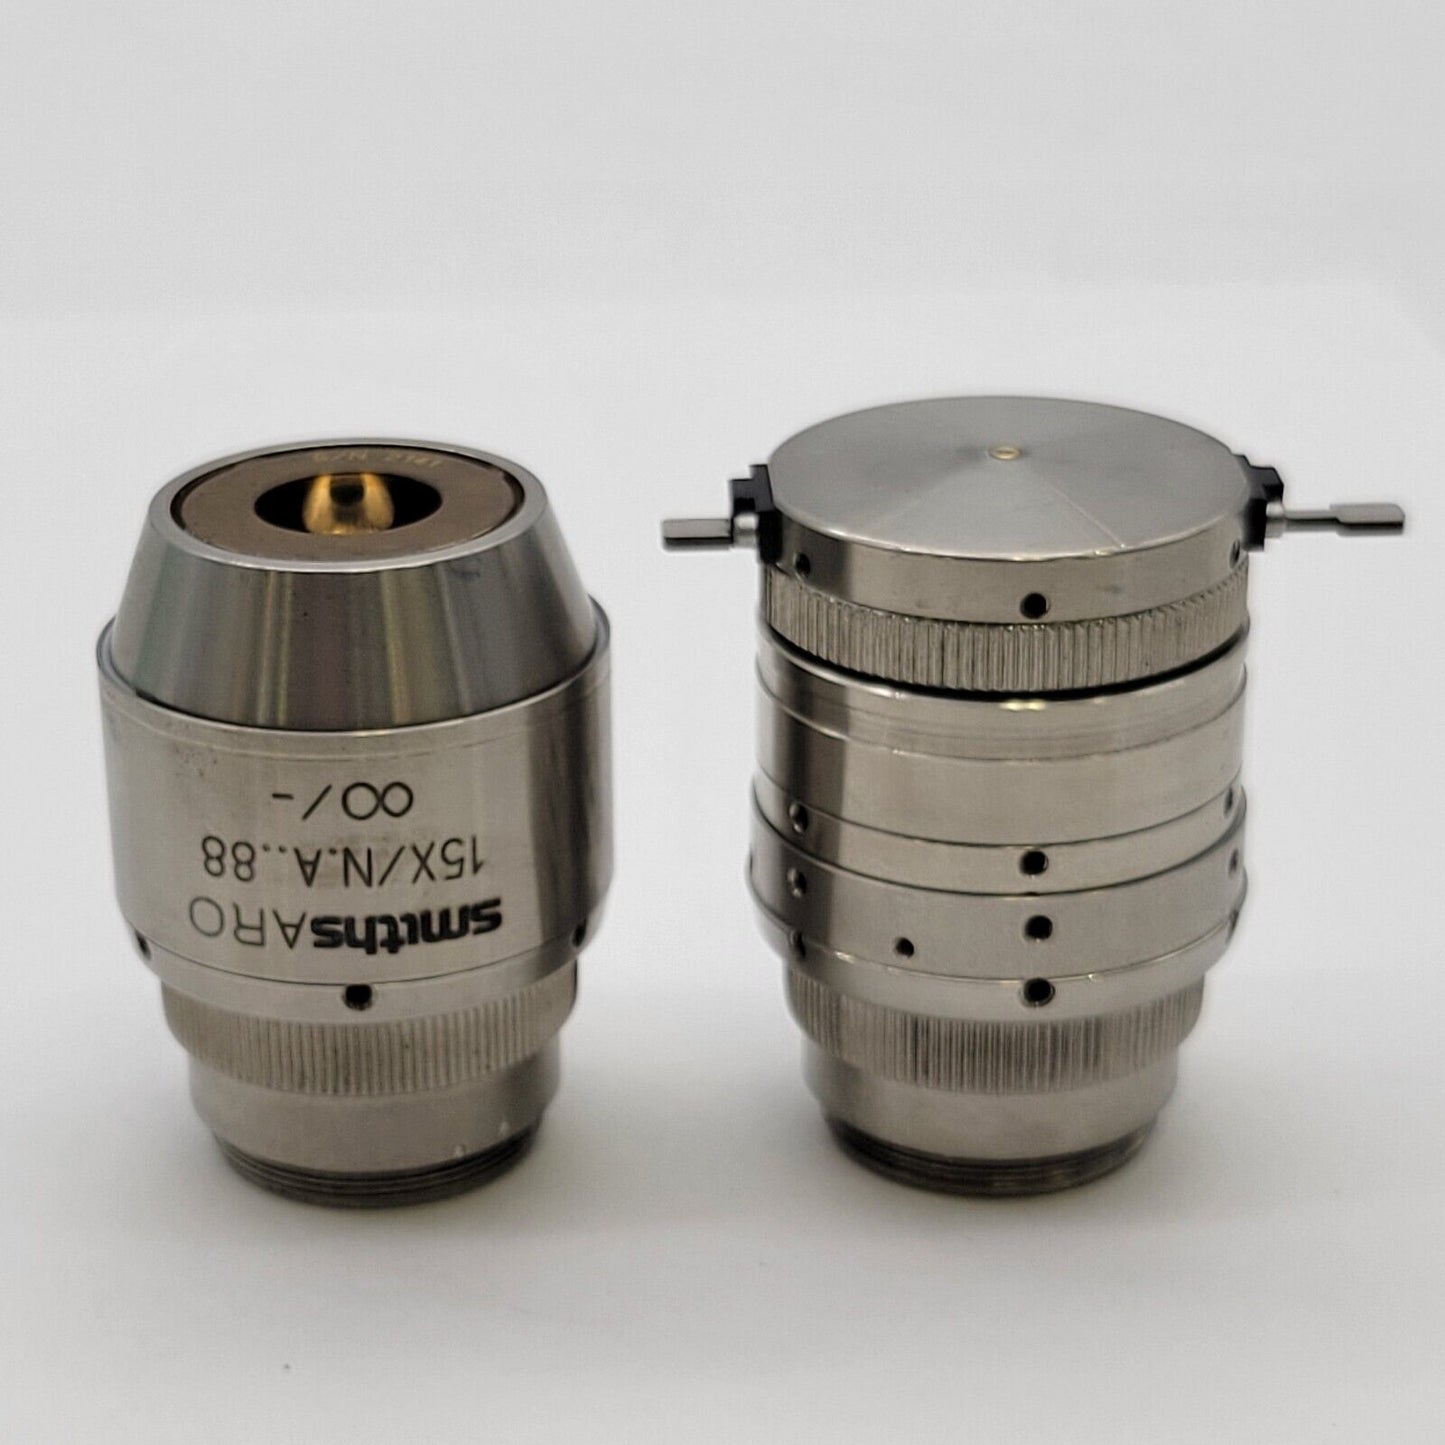 Smiths ARO 15x and ATR 36x Microscope Objective for IlluminatIR Infrared - microscopemarketplace